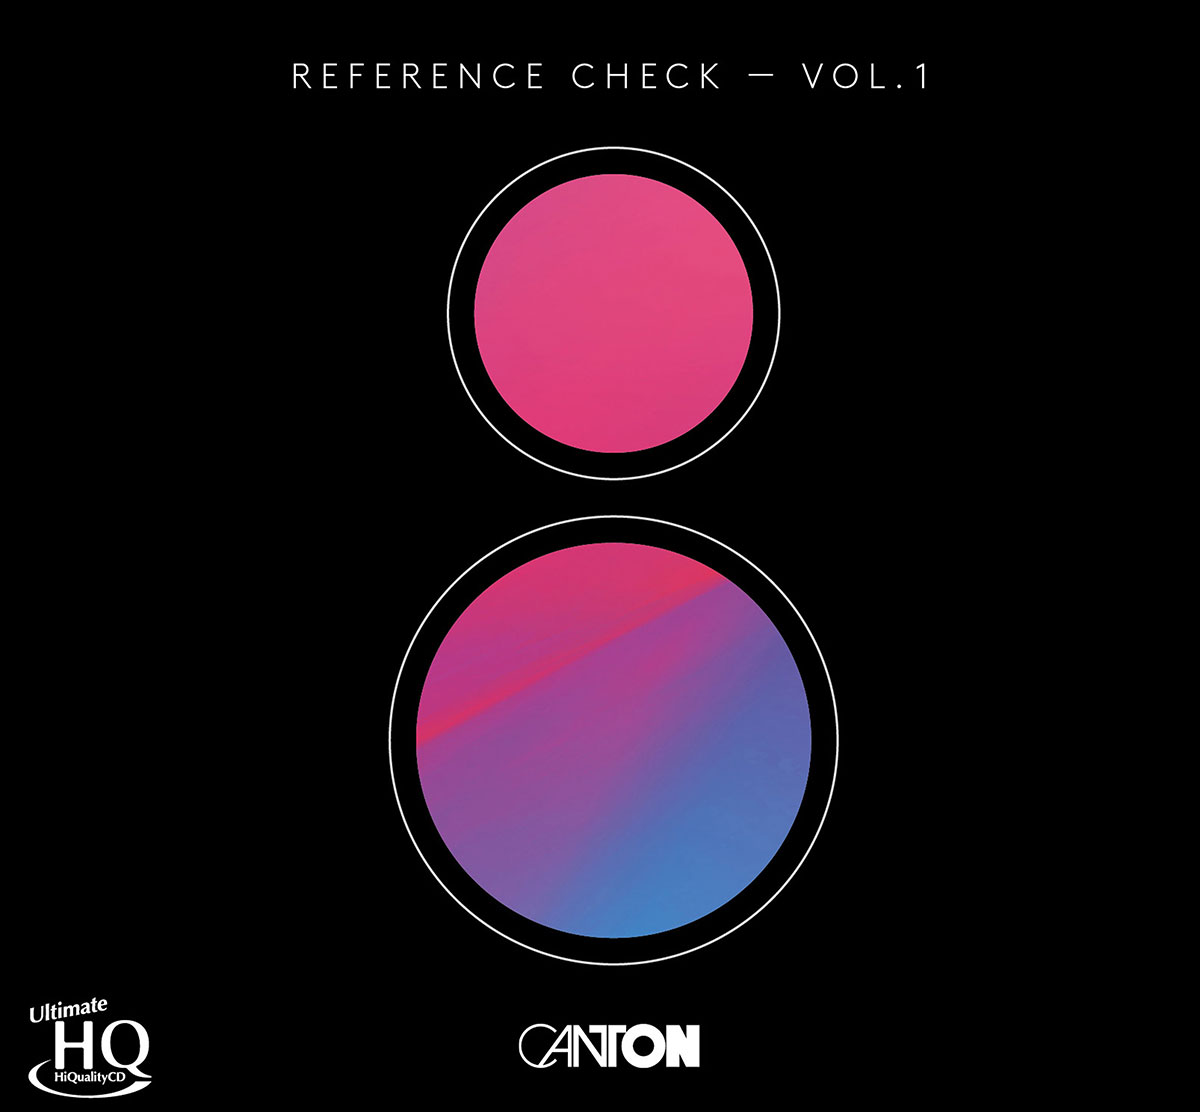 Canton CD - Reference Check Vol. I